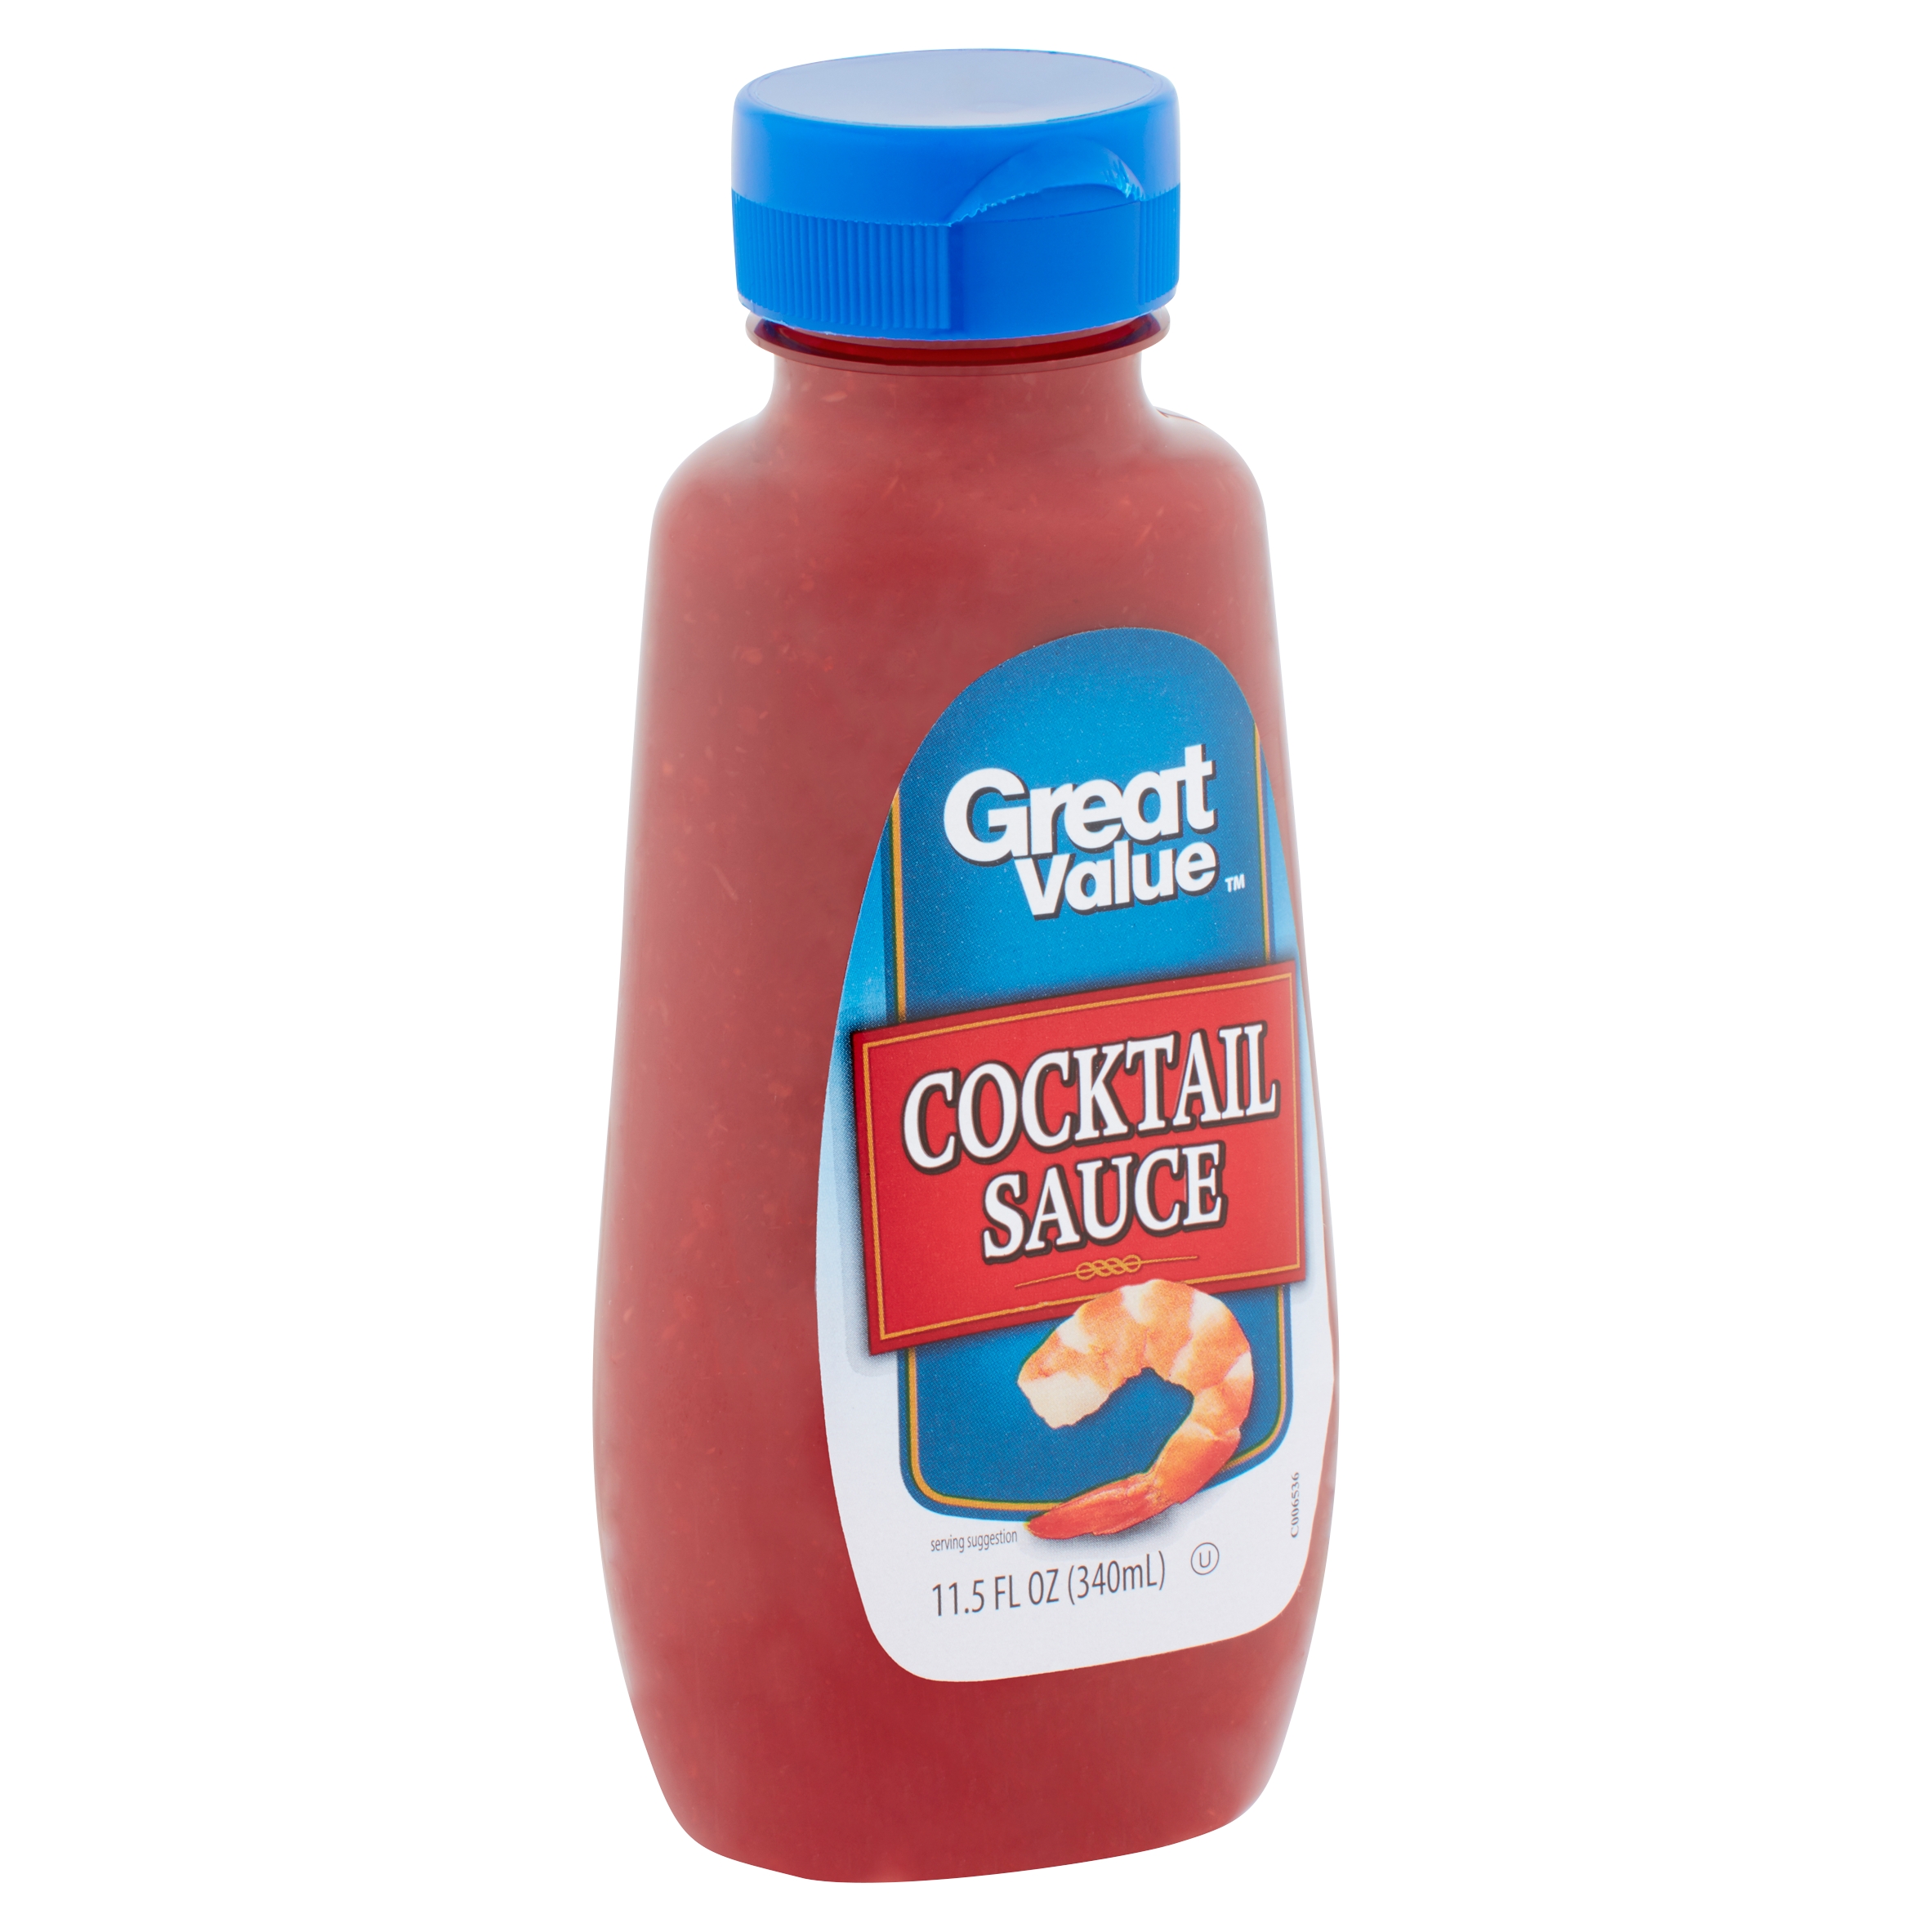 Great Value Cocktail Sauce, 11.5 Fl Oz Image